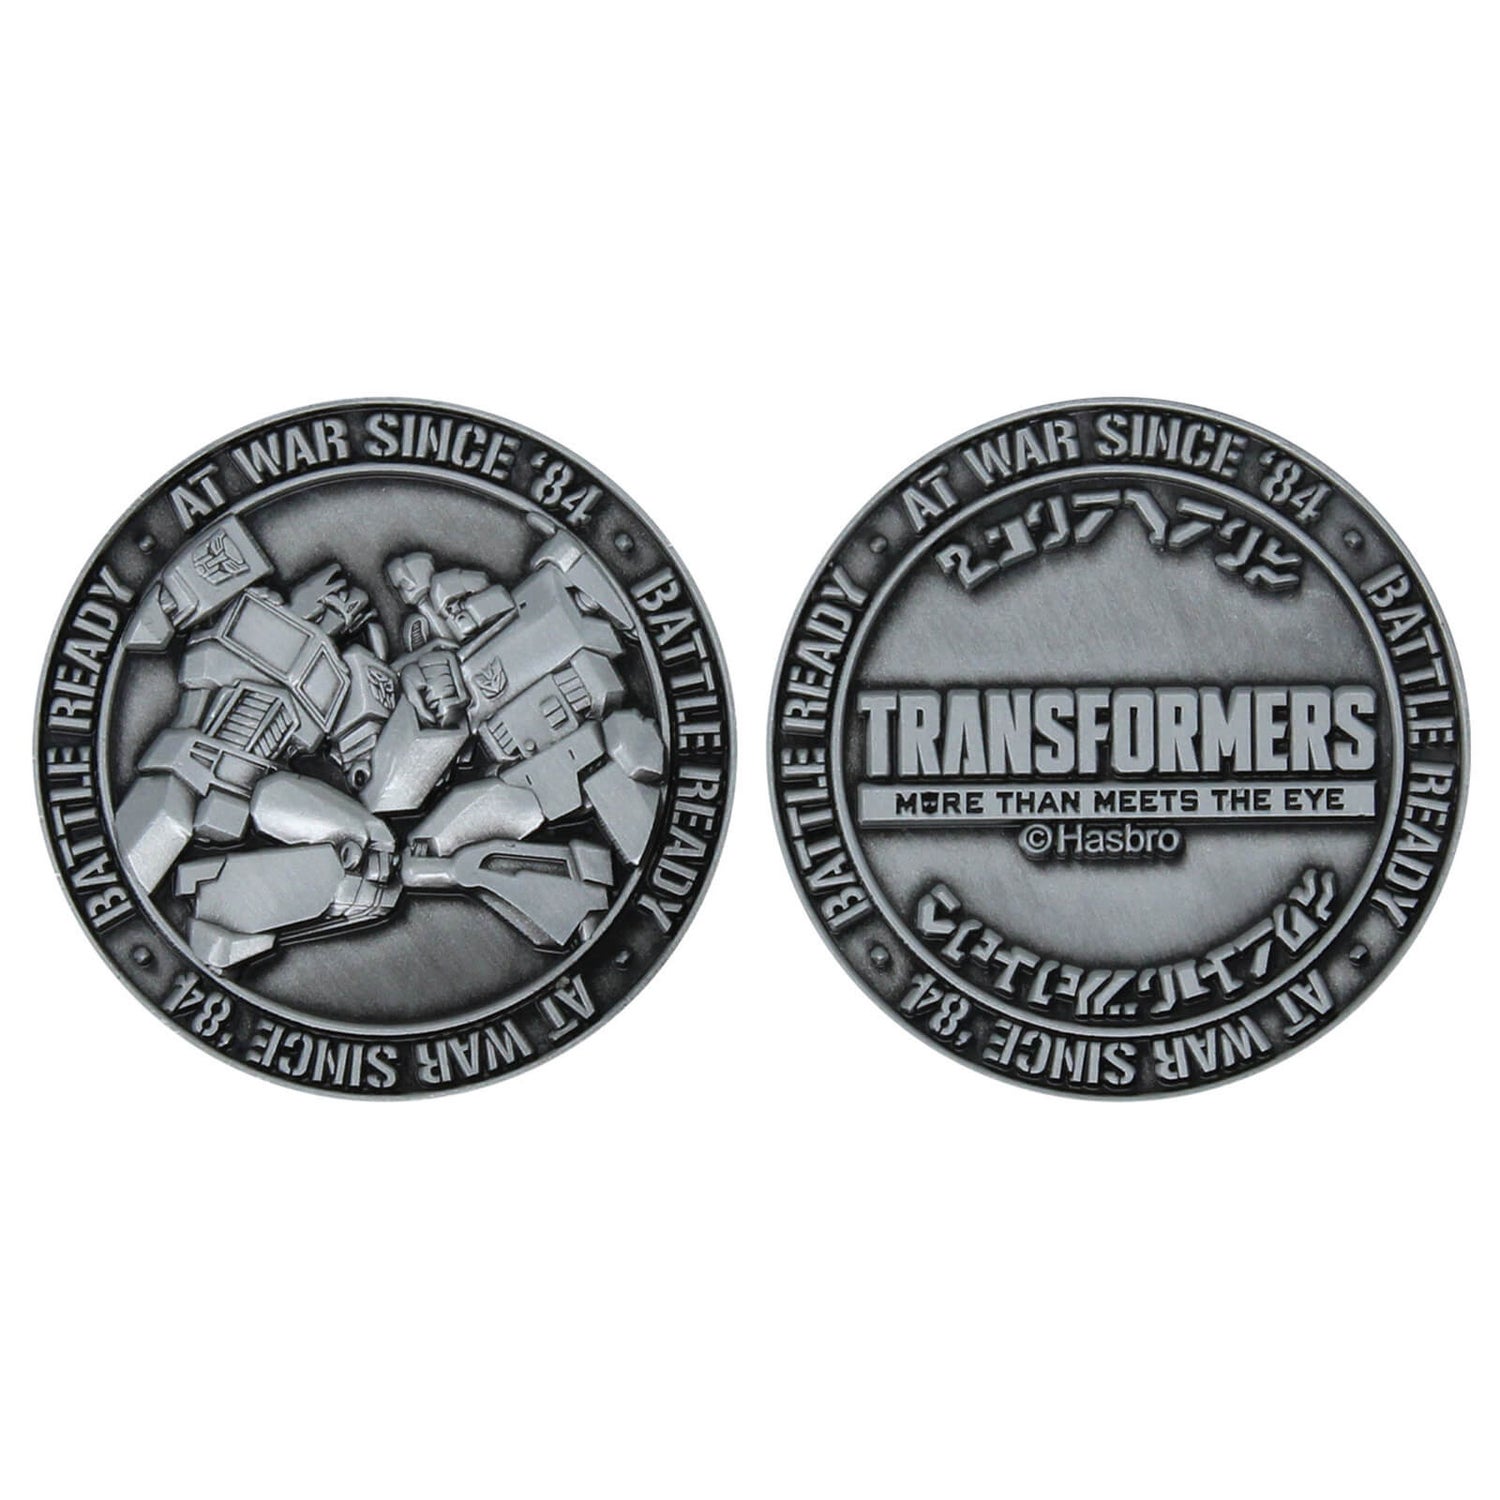 Fanattik Transformers Limited Edition Münze